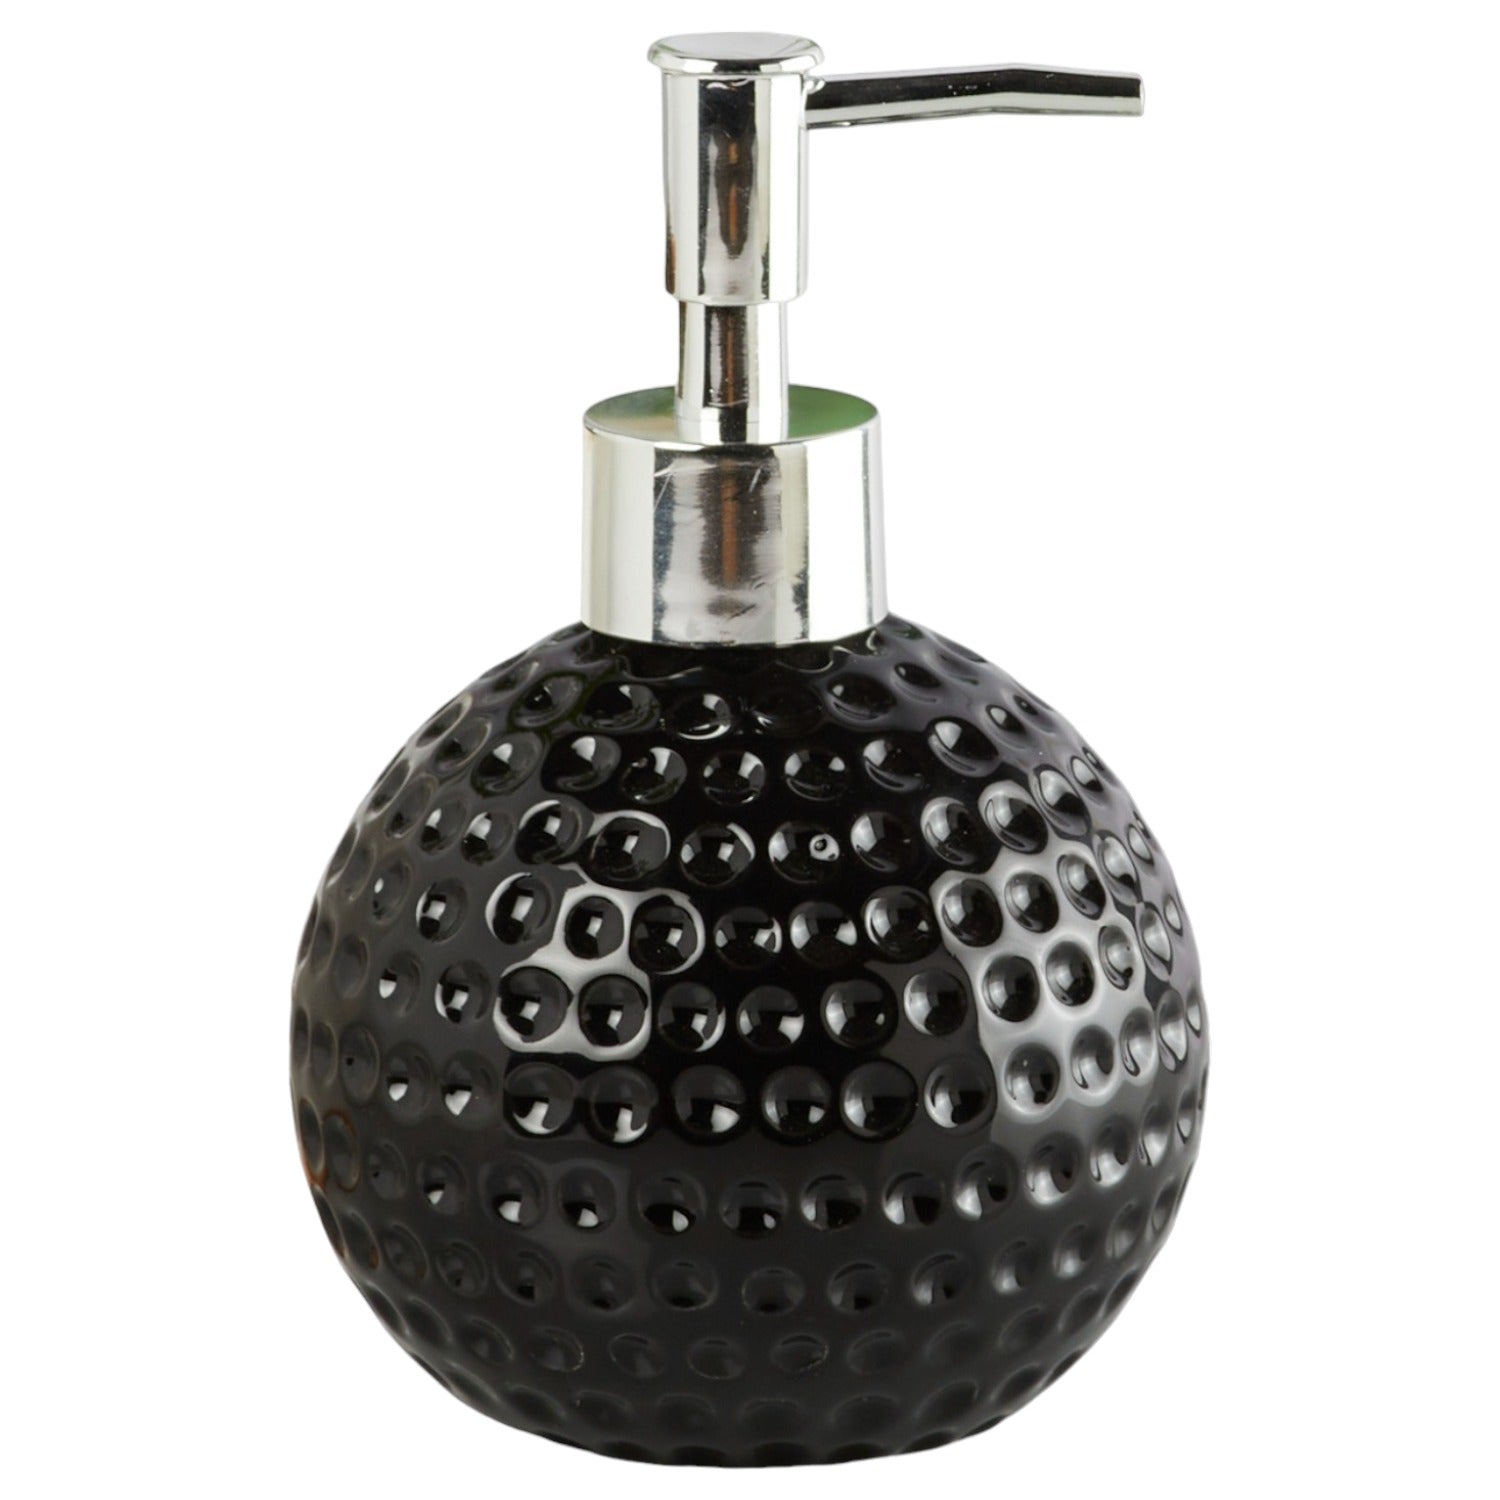 Ceramic Soap Dispenser handwash Pump for Bathroom, Set of 1, Black (10303)